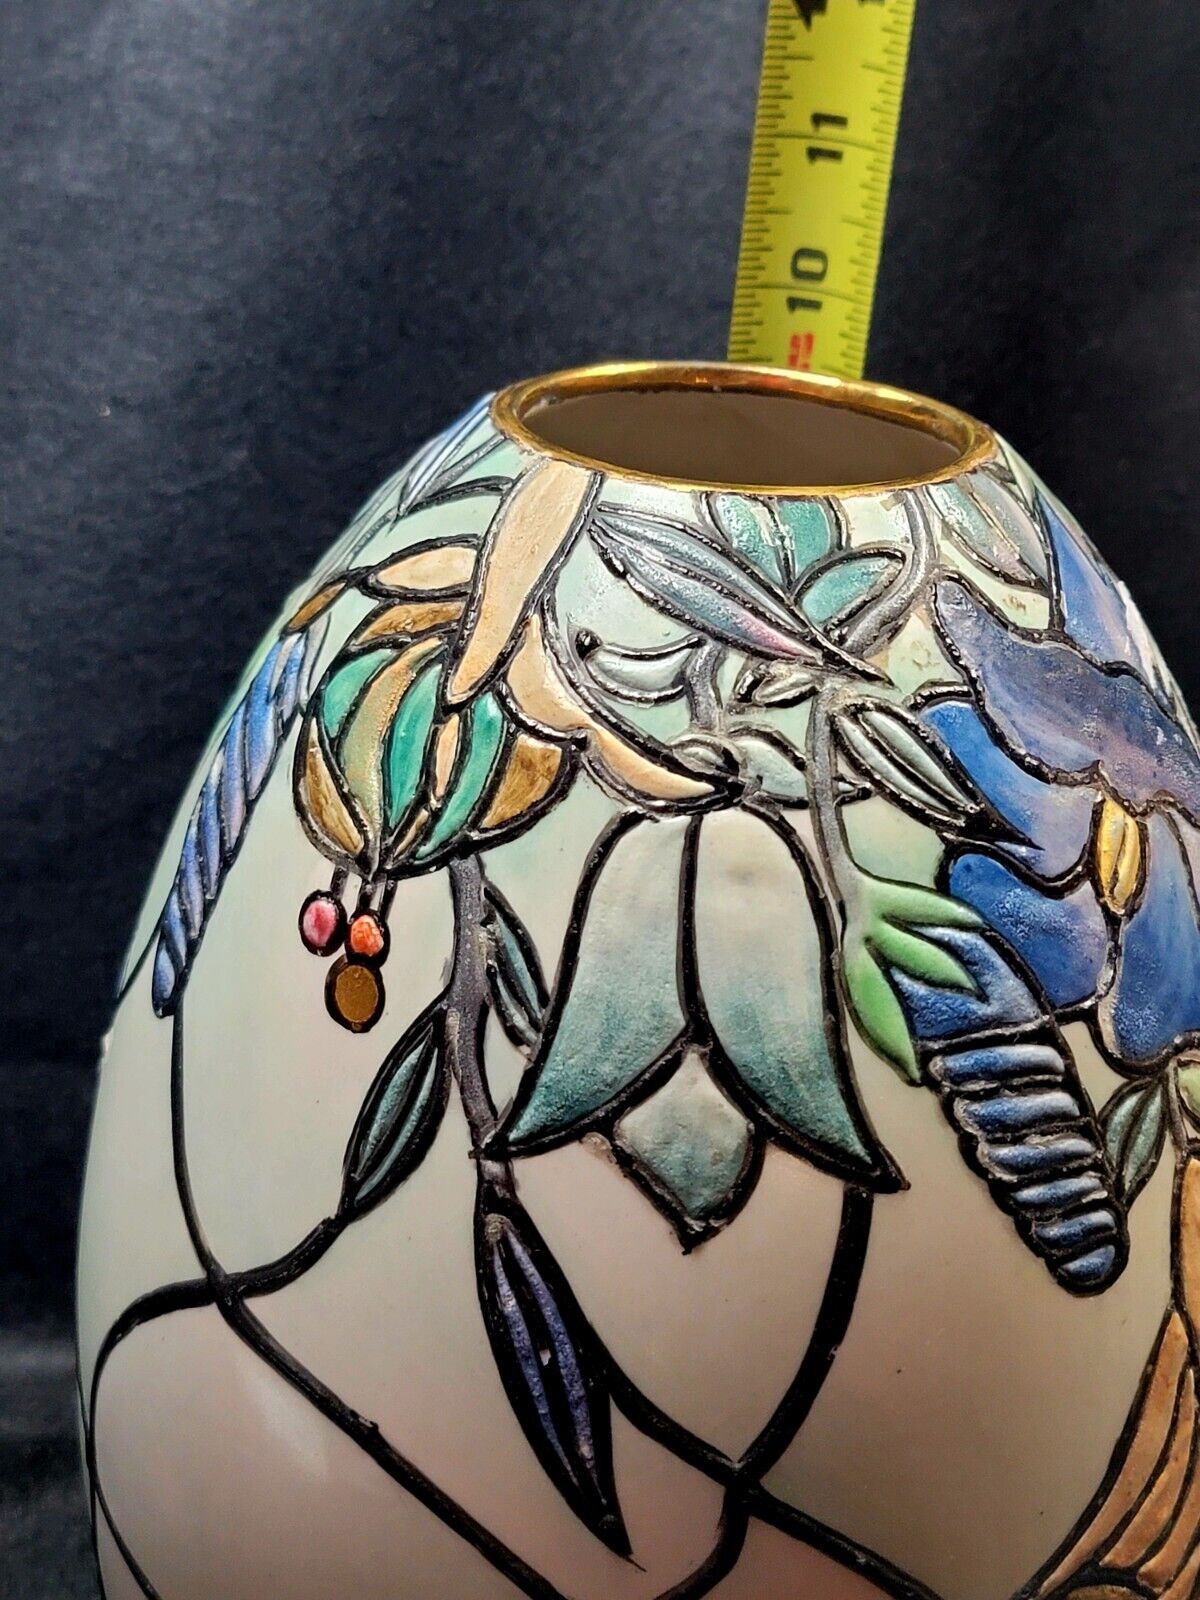 Stunning Floral Egg Shaped Vase with Vivid Blues Hand painted Moorcraft style